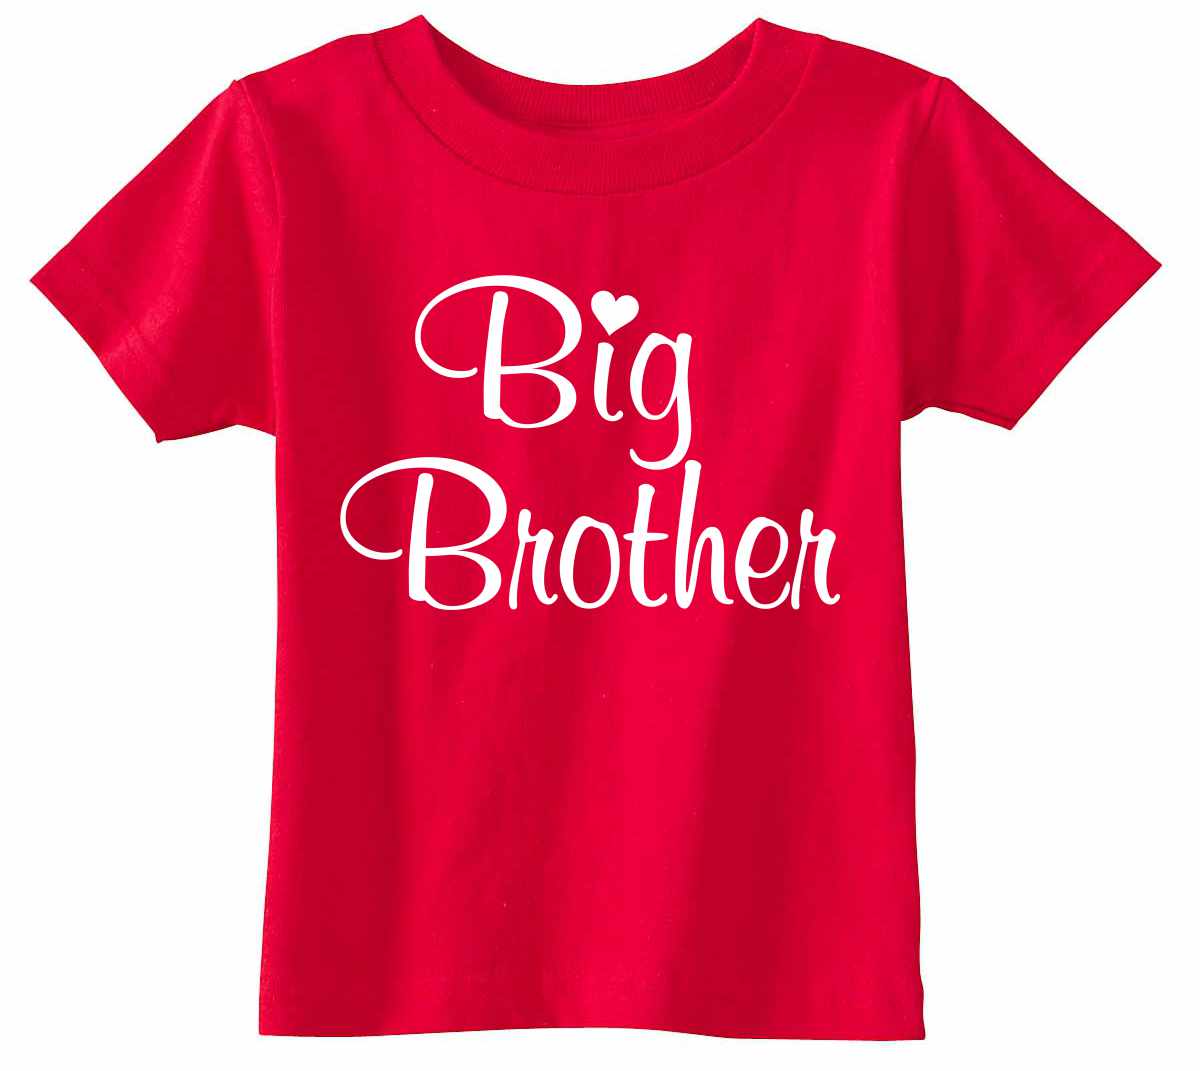 Big Brother on Infant-Toddler T-Shirt (#1344-7)